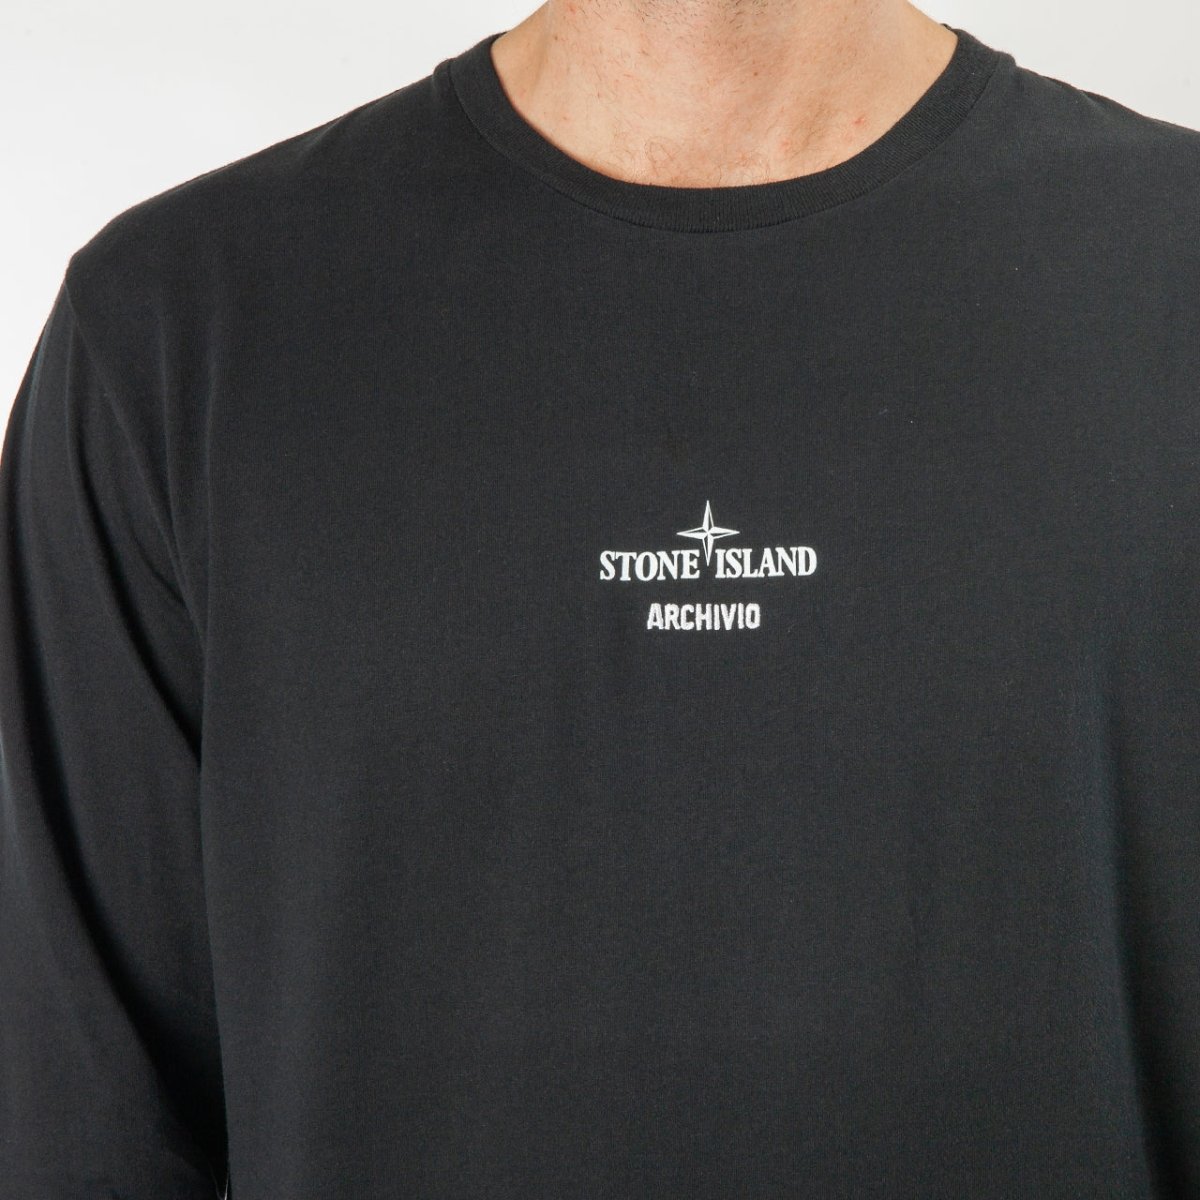 Stone Island Archivo T-Shirt (Schwarz)  - Allike Store